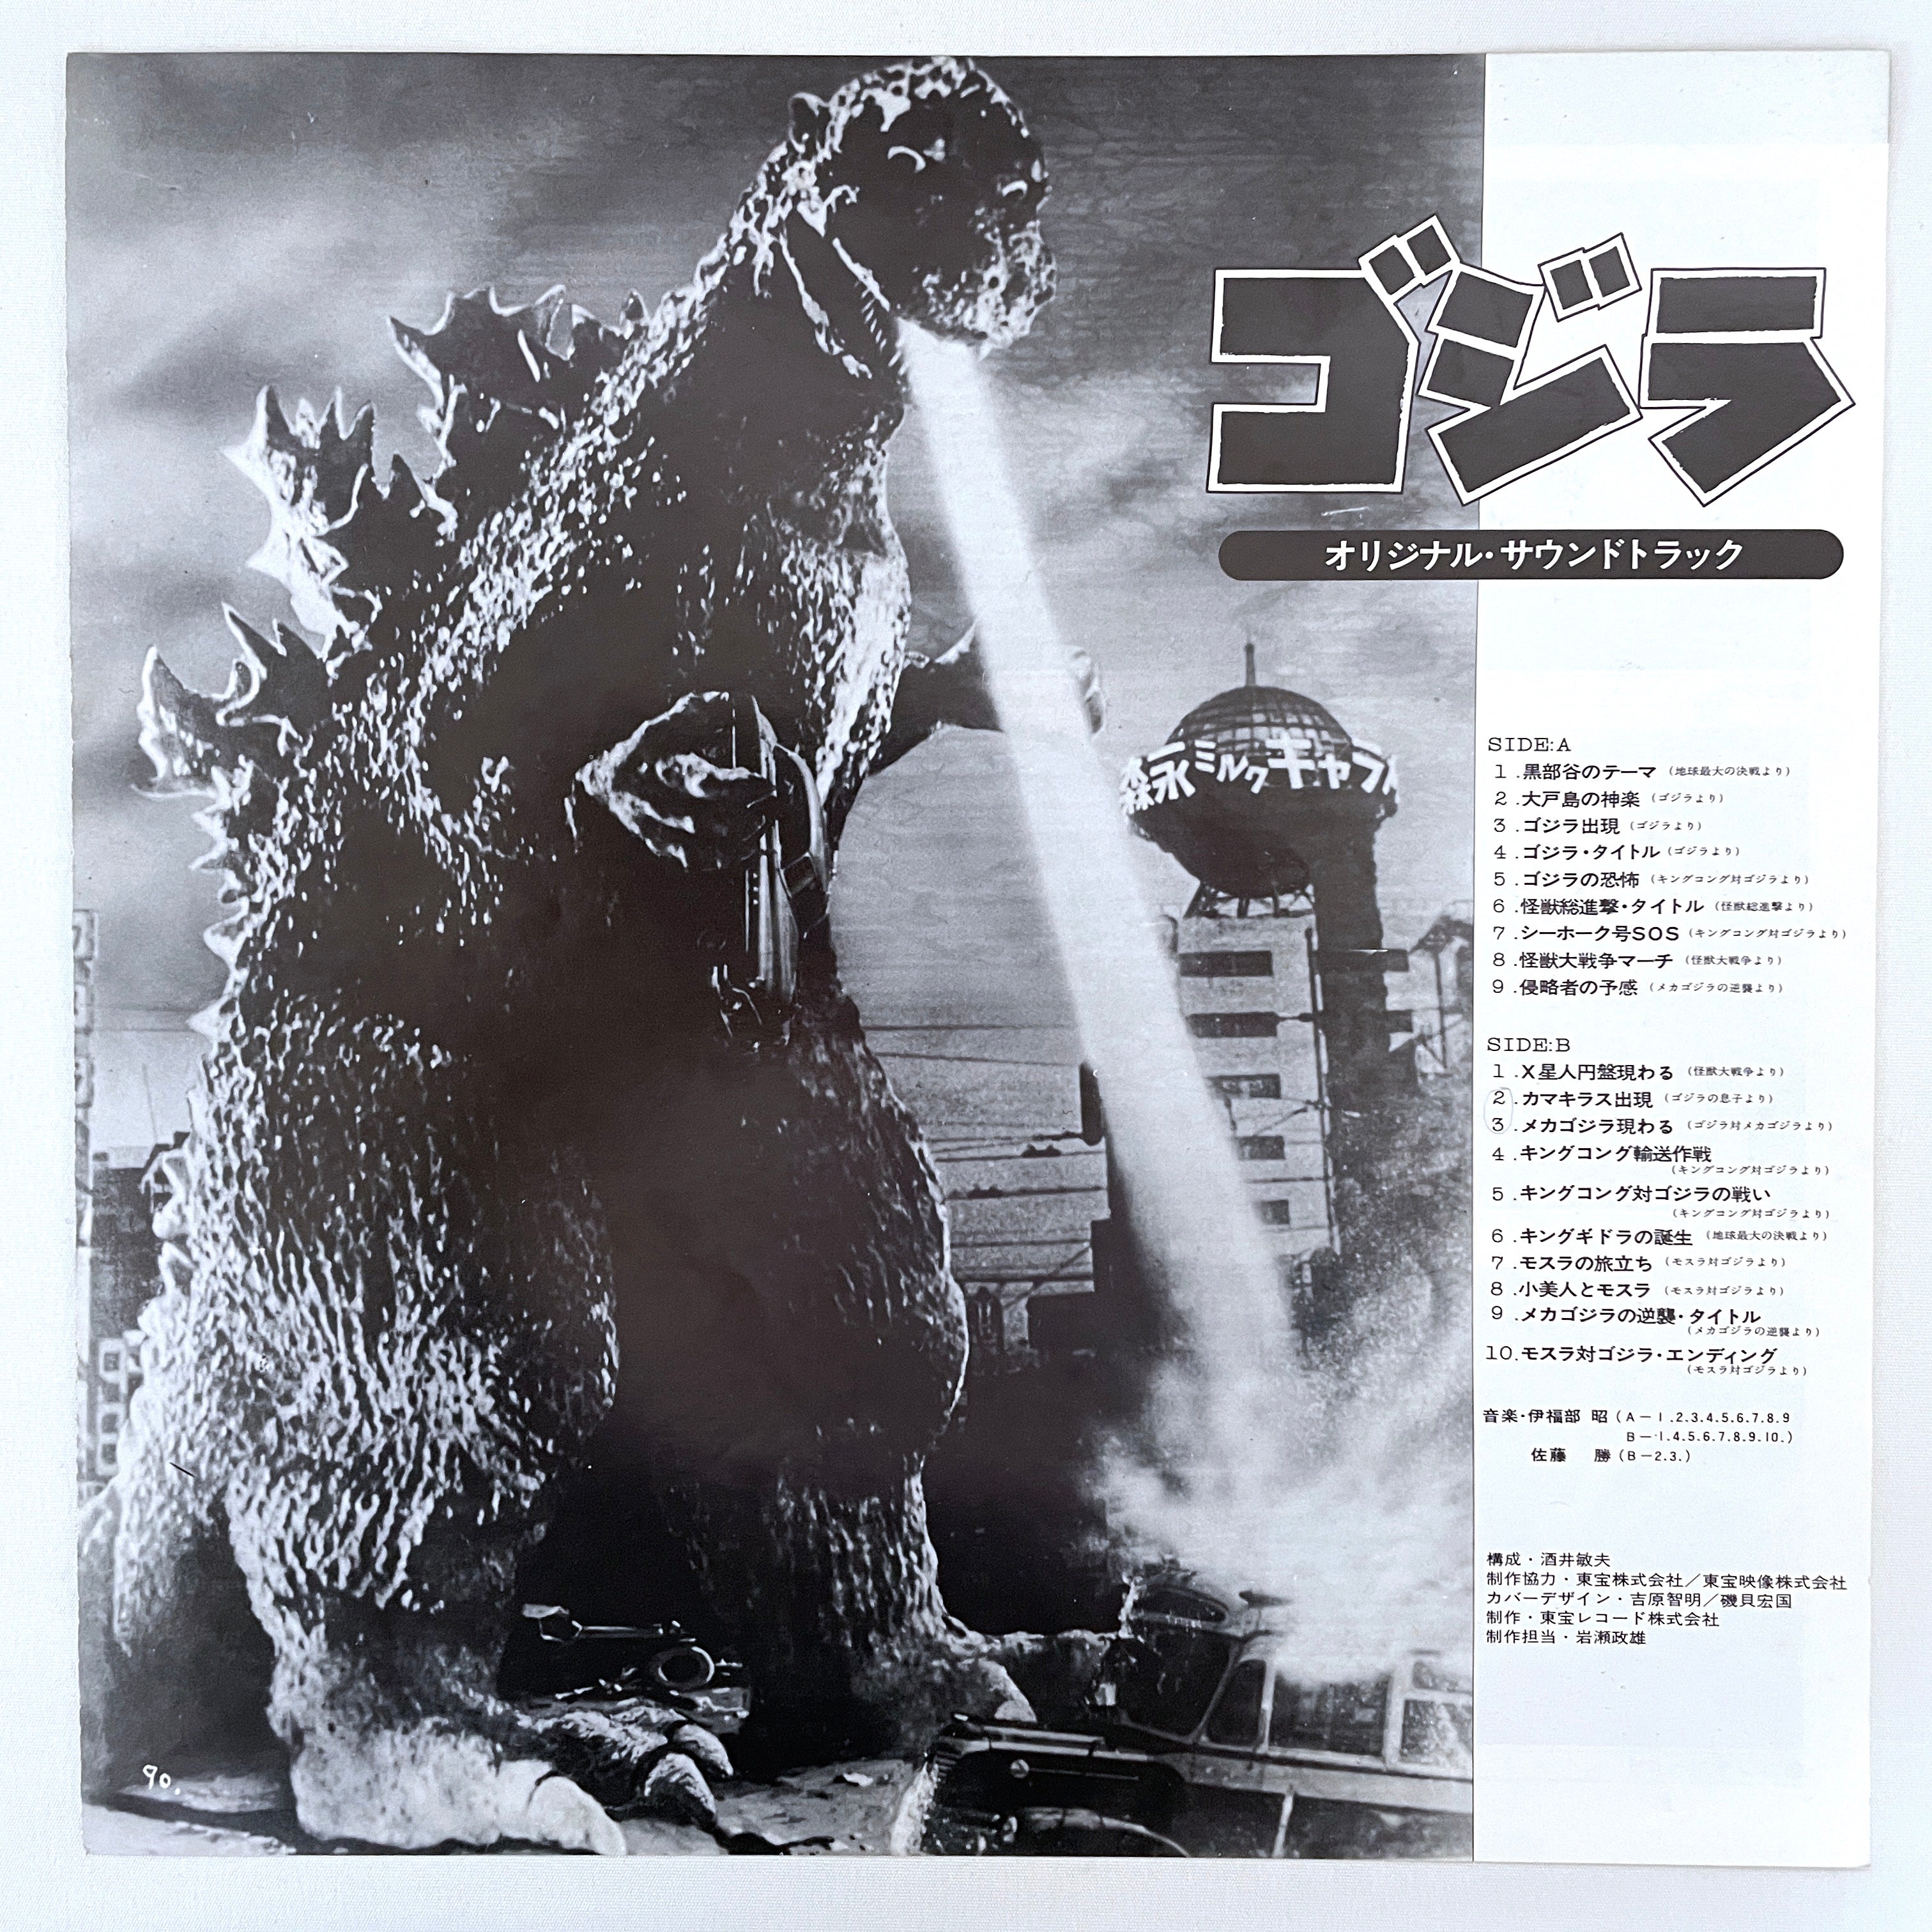 Original Sound Track Godzilla! AX-8100 – Portal Records